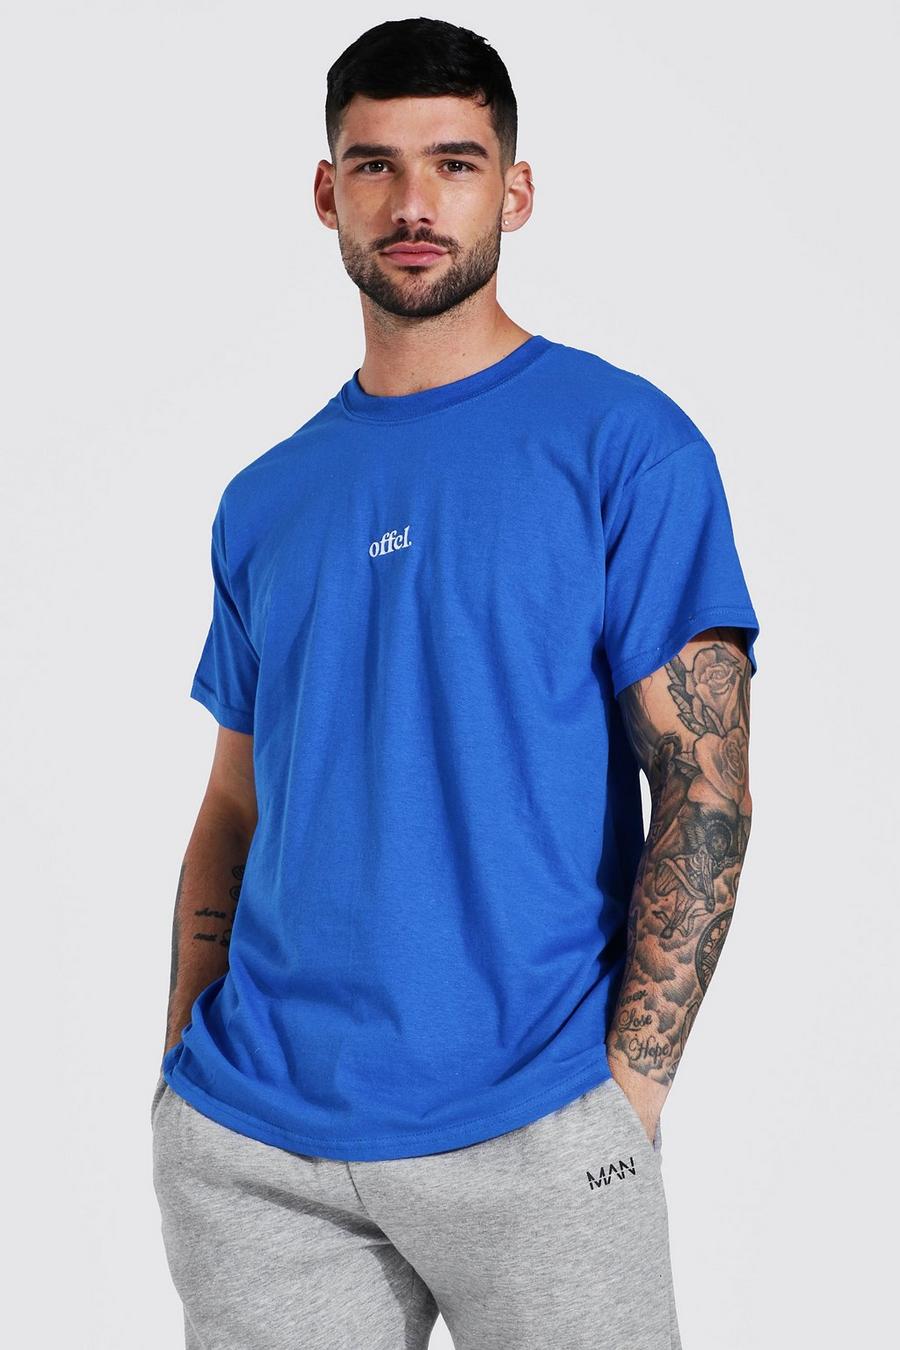 T-shirt brodé - Offcl, Cobalt bleu image number 1